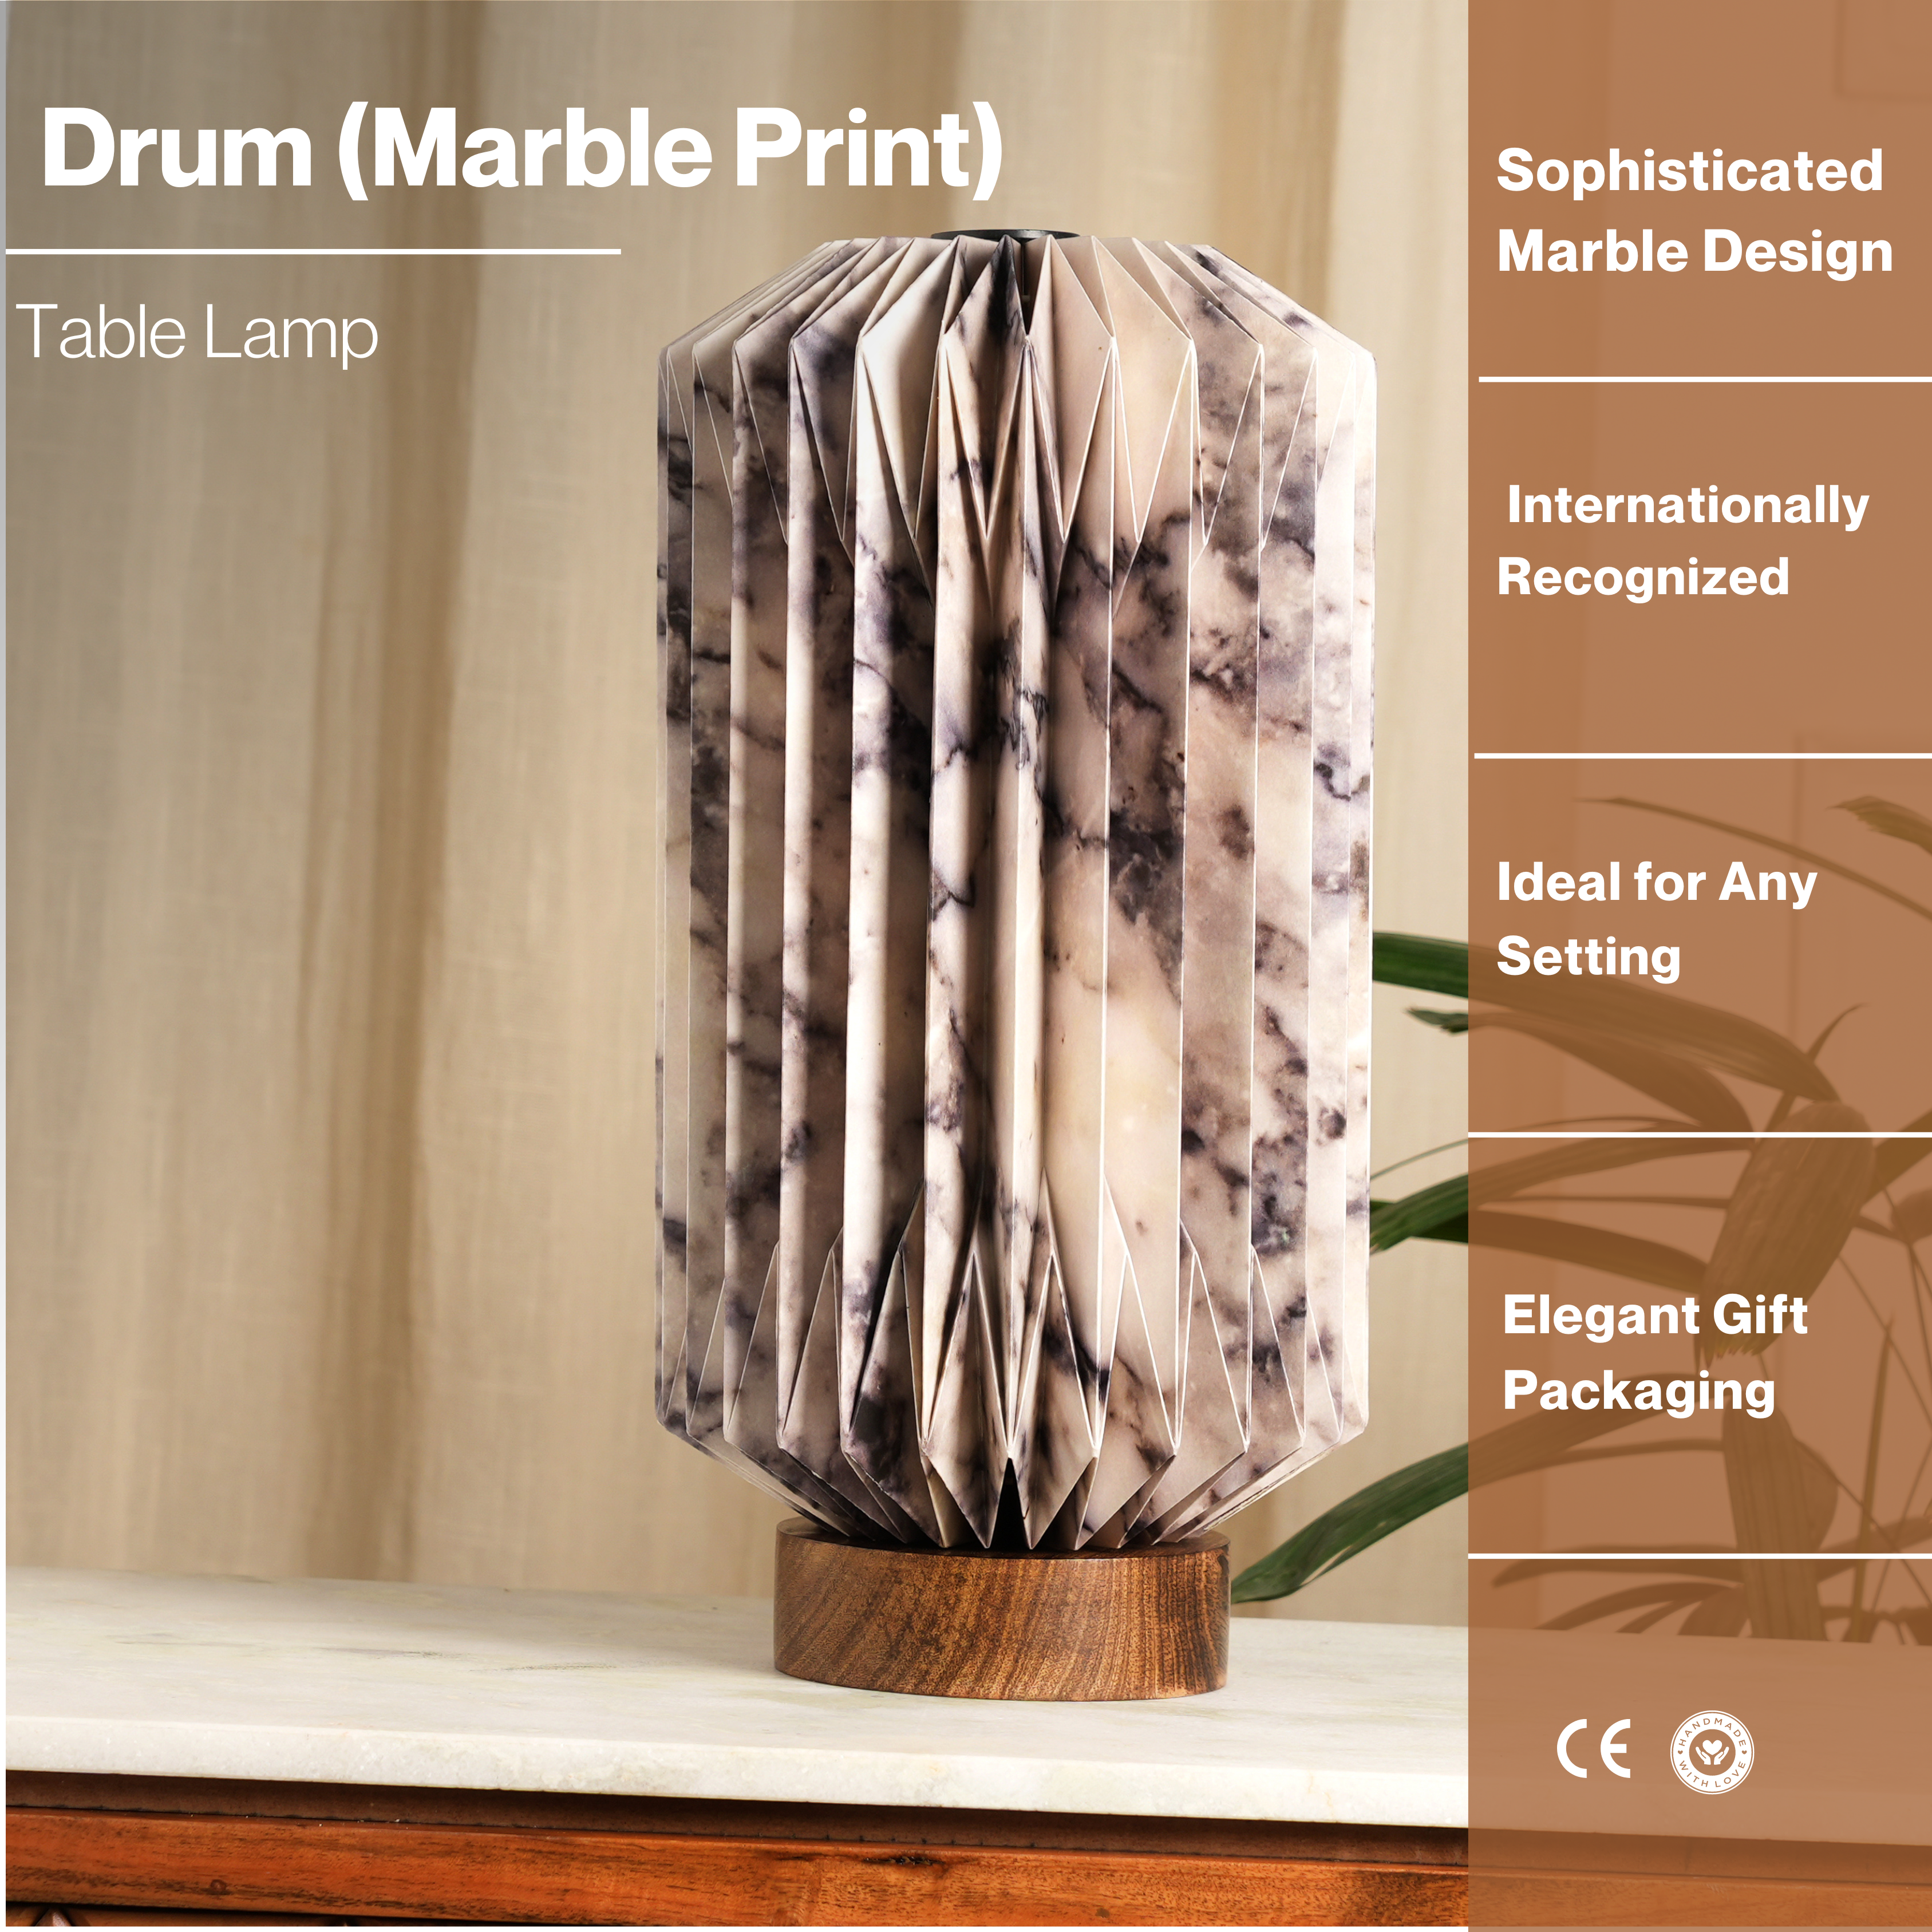 Drum Marble Print Table Lamp